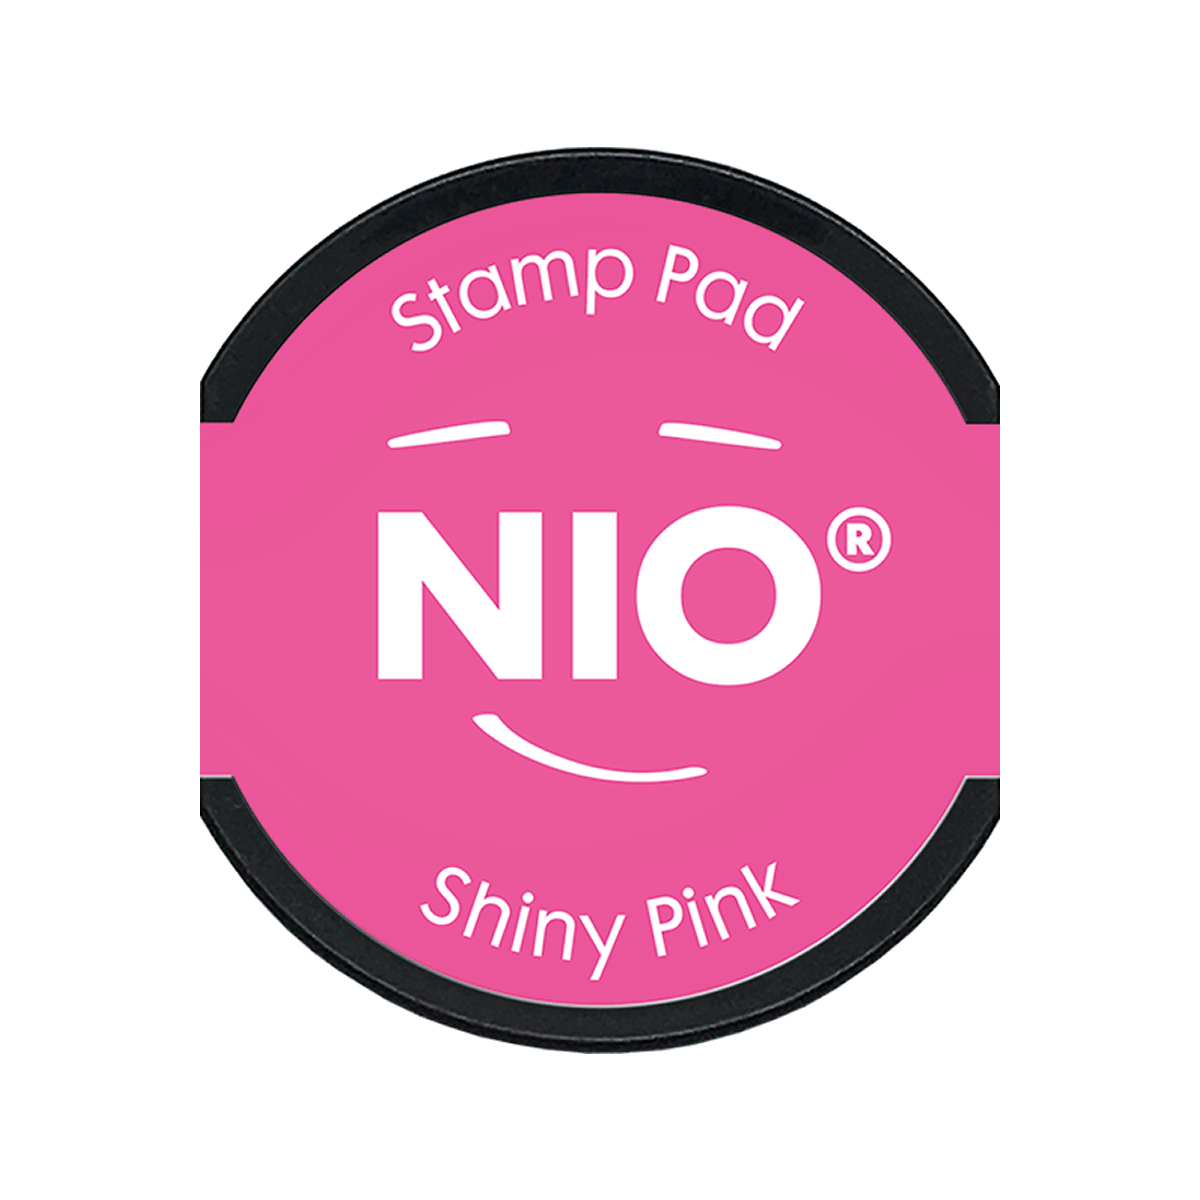 COLOP Arts & Crafts NIO Ταμπόν για Αυτόματη Σφραγίδα Shiny pink